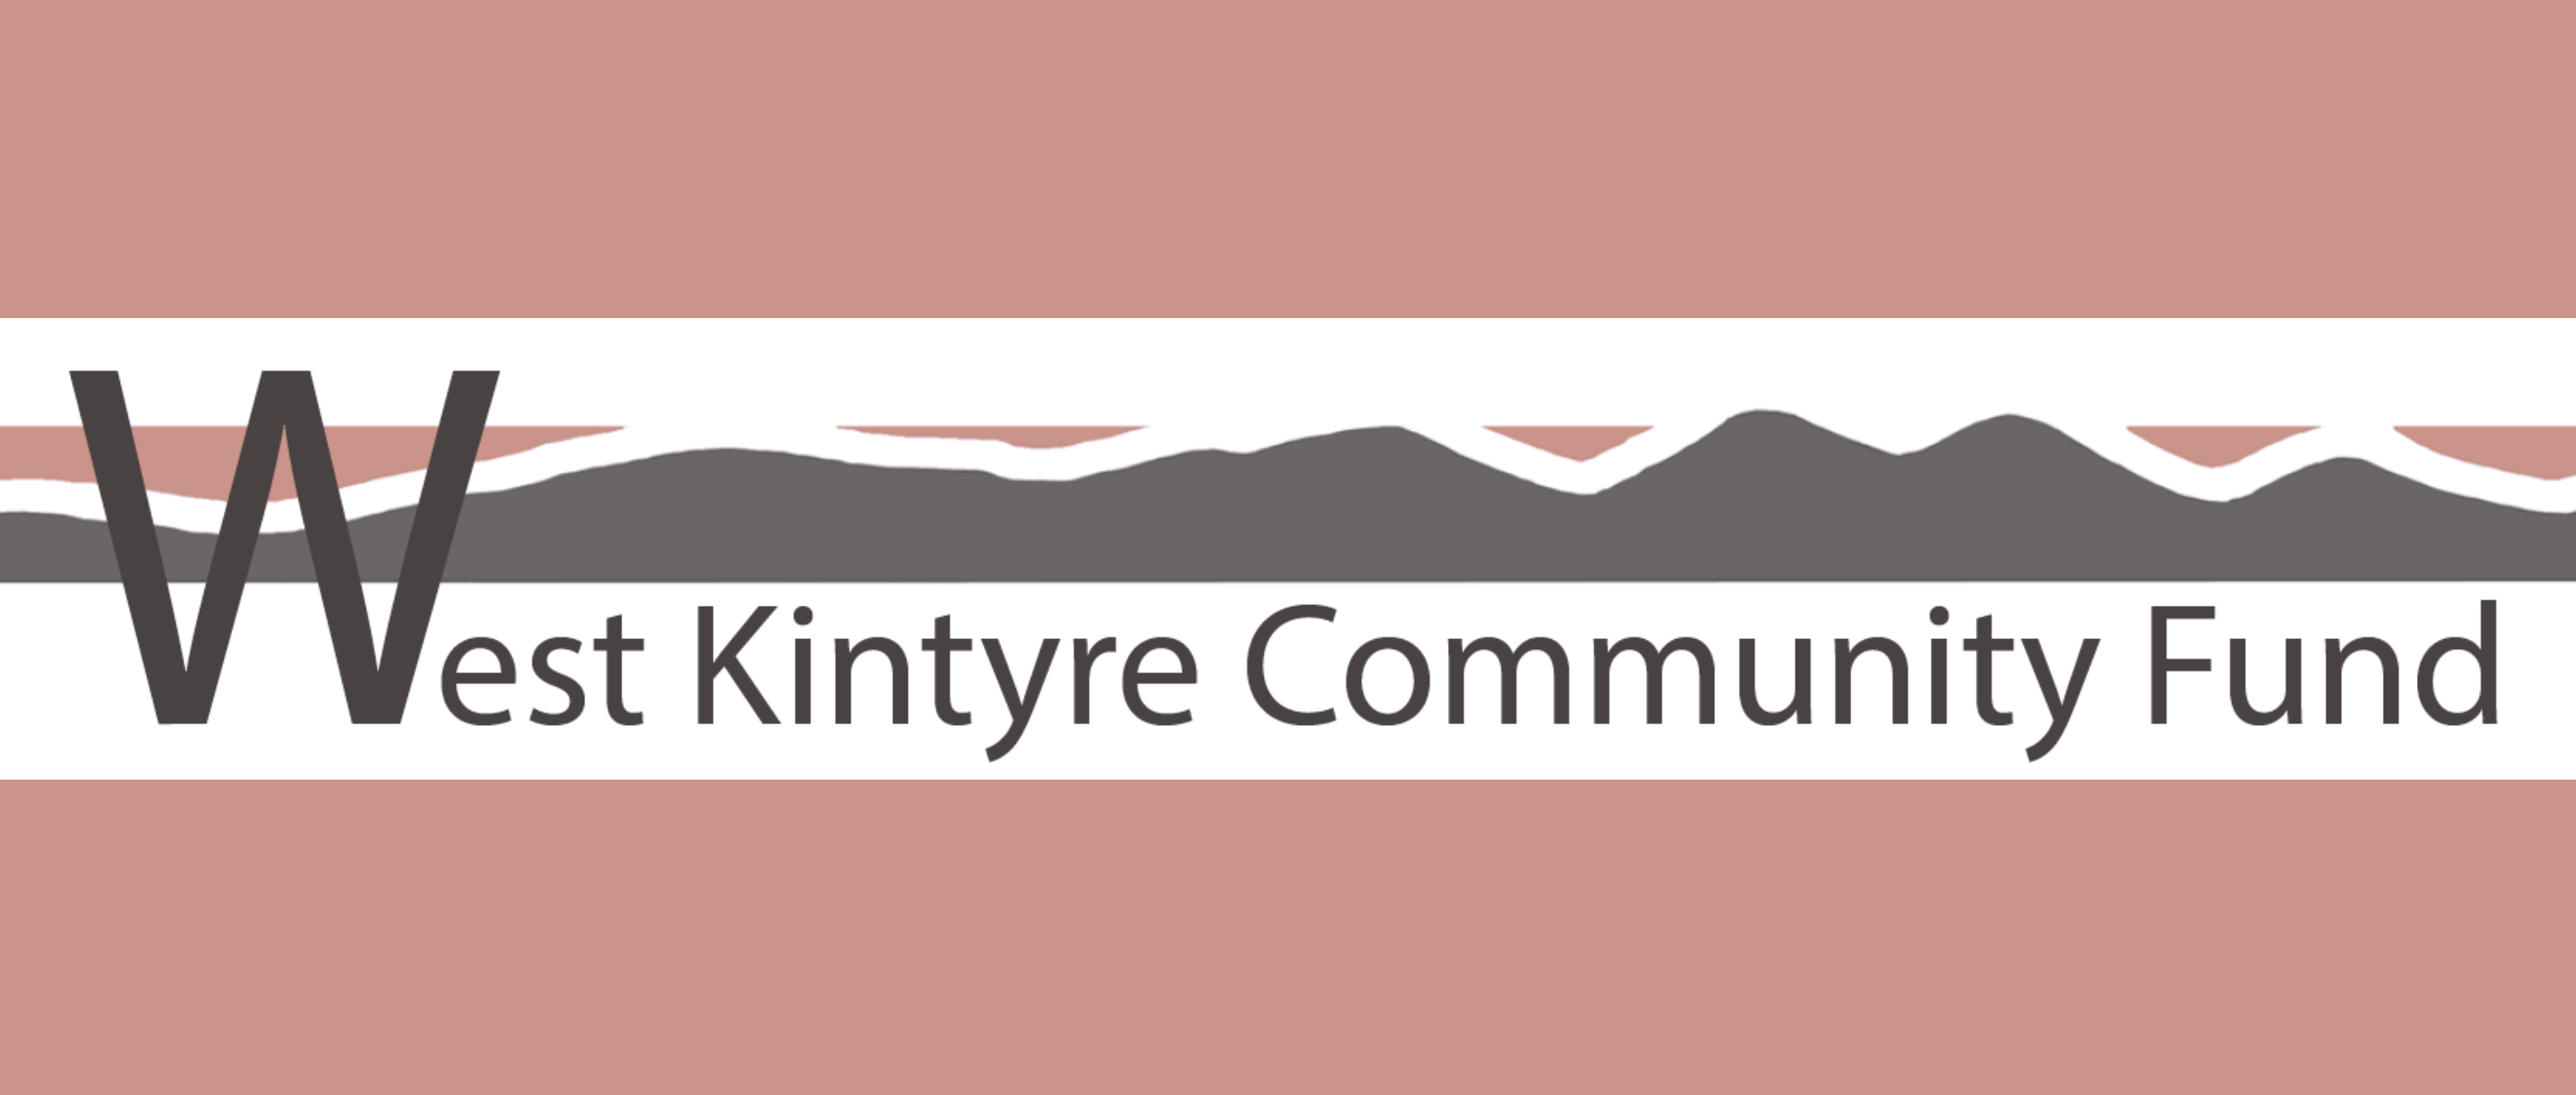 West Kintyre Community Fund